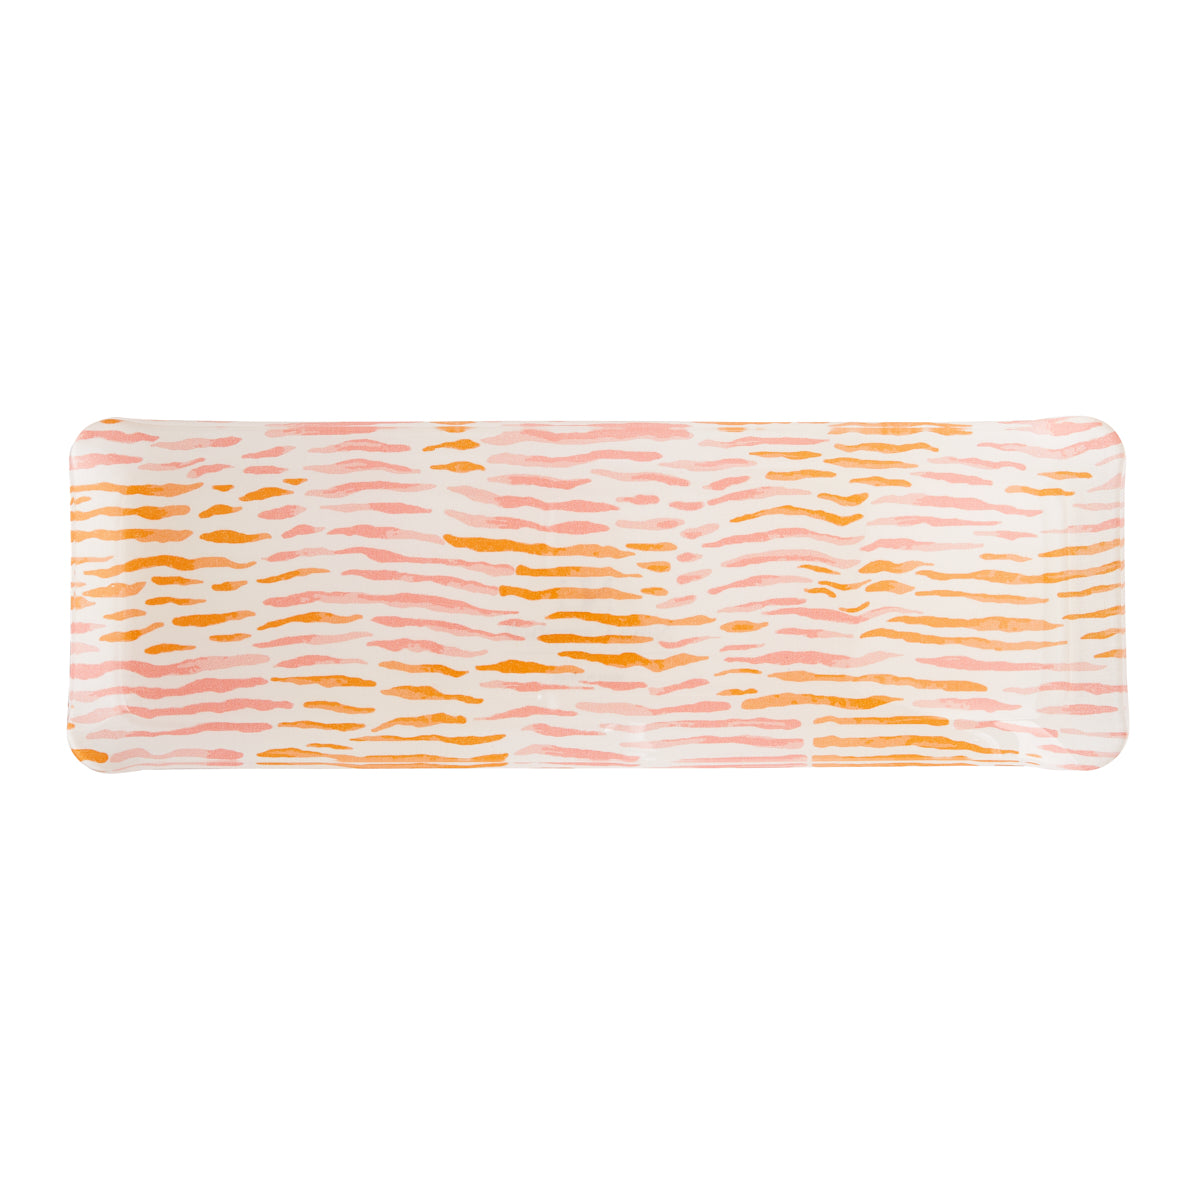 Nina Campbell Fabric Tray Oblong - Arles Pink/Orange